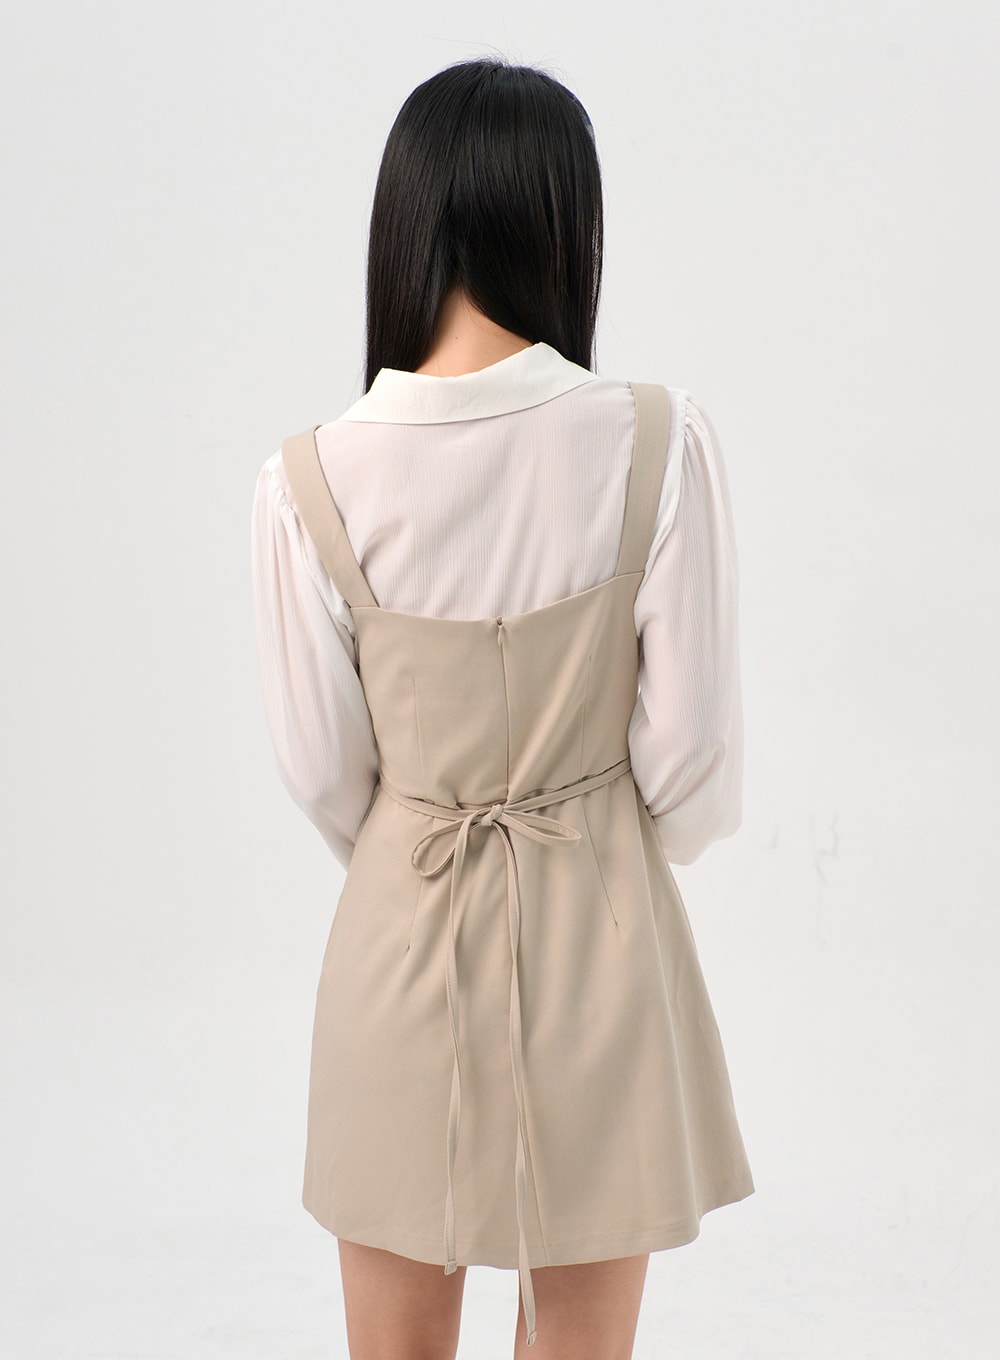 Square Neck Sleeveless Mini Dress OS302